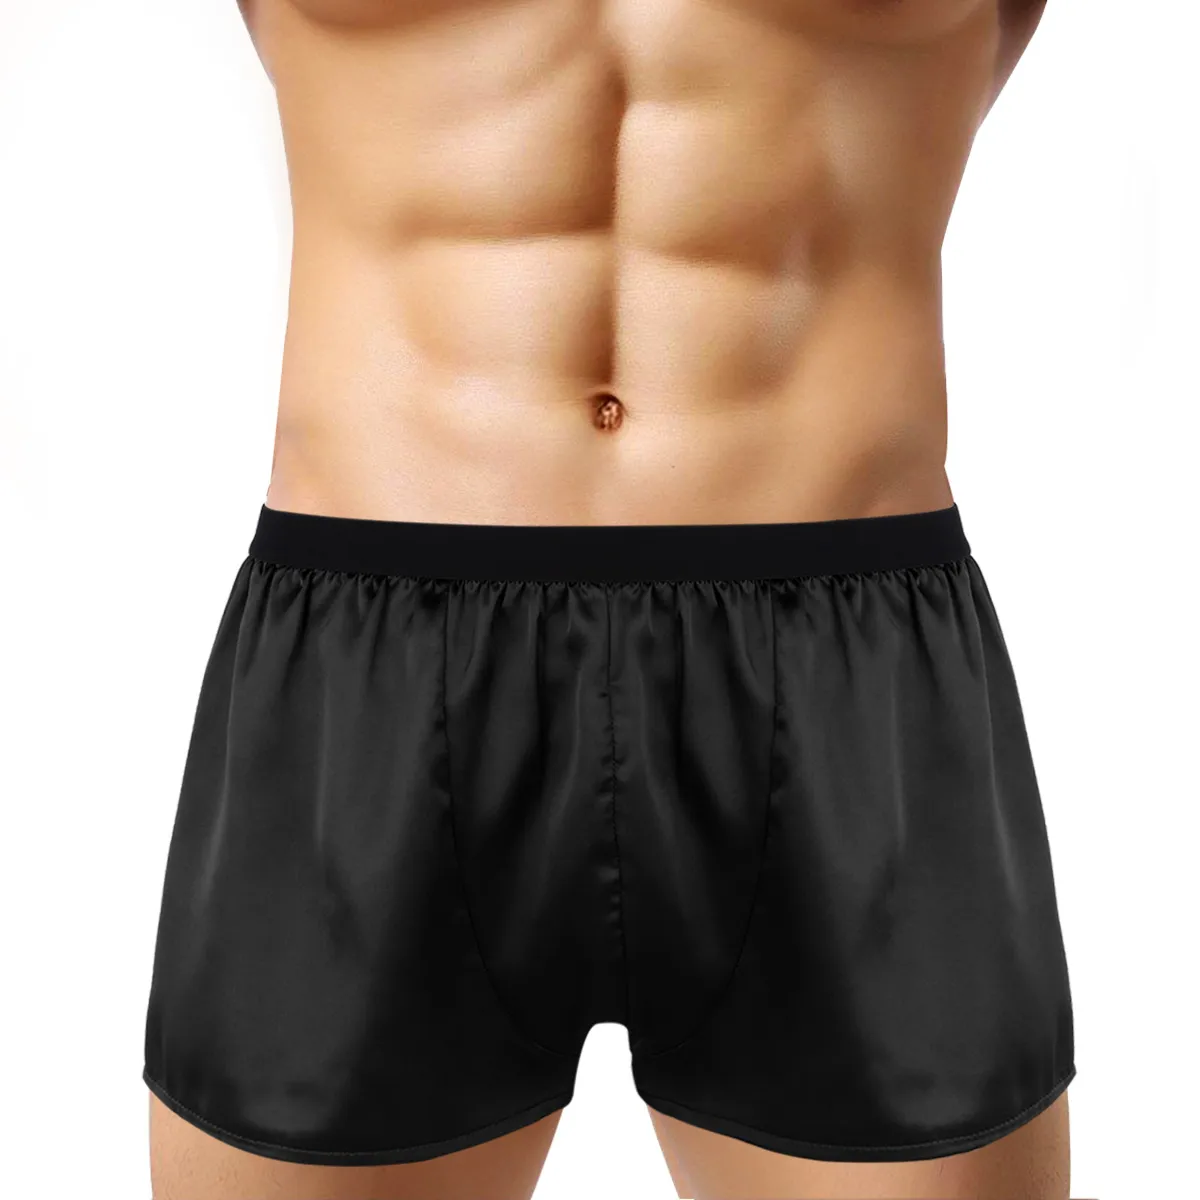 Herrboxare trunks underkläder Silk Satin Basic Boxers Shorts Underbyxor Lightweight Lounge Sports Short Pants For Man